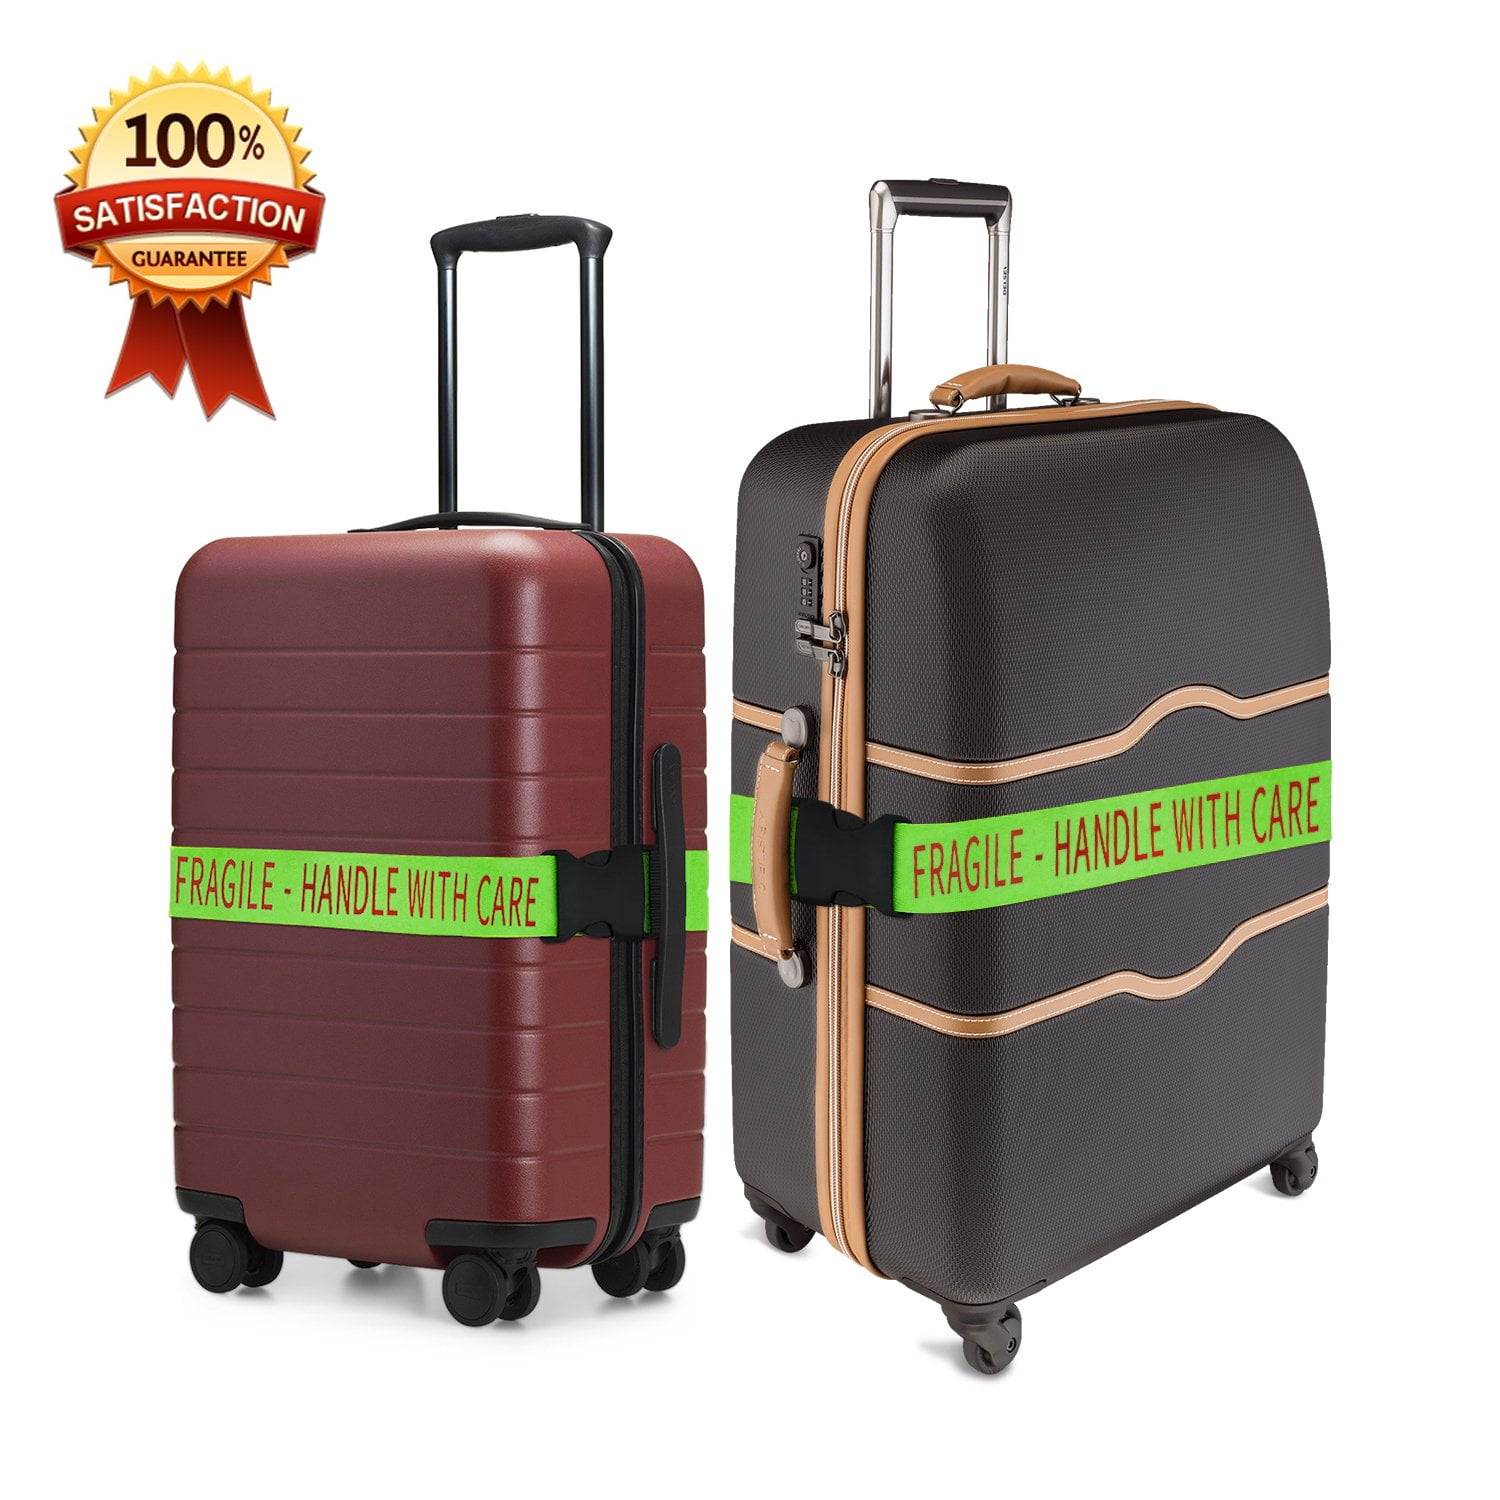 Gutsdoor Adjustable Travel Luggage Strap Suitcase Belt Travel Bag Accessories 1.96 in W x 6.23 ft L 2 Pack